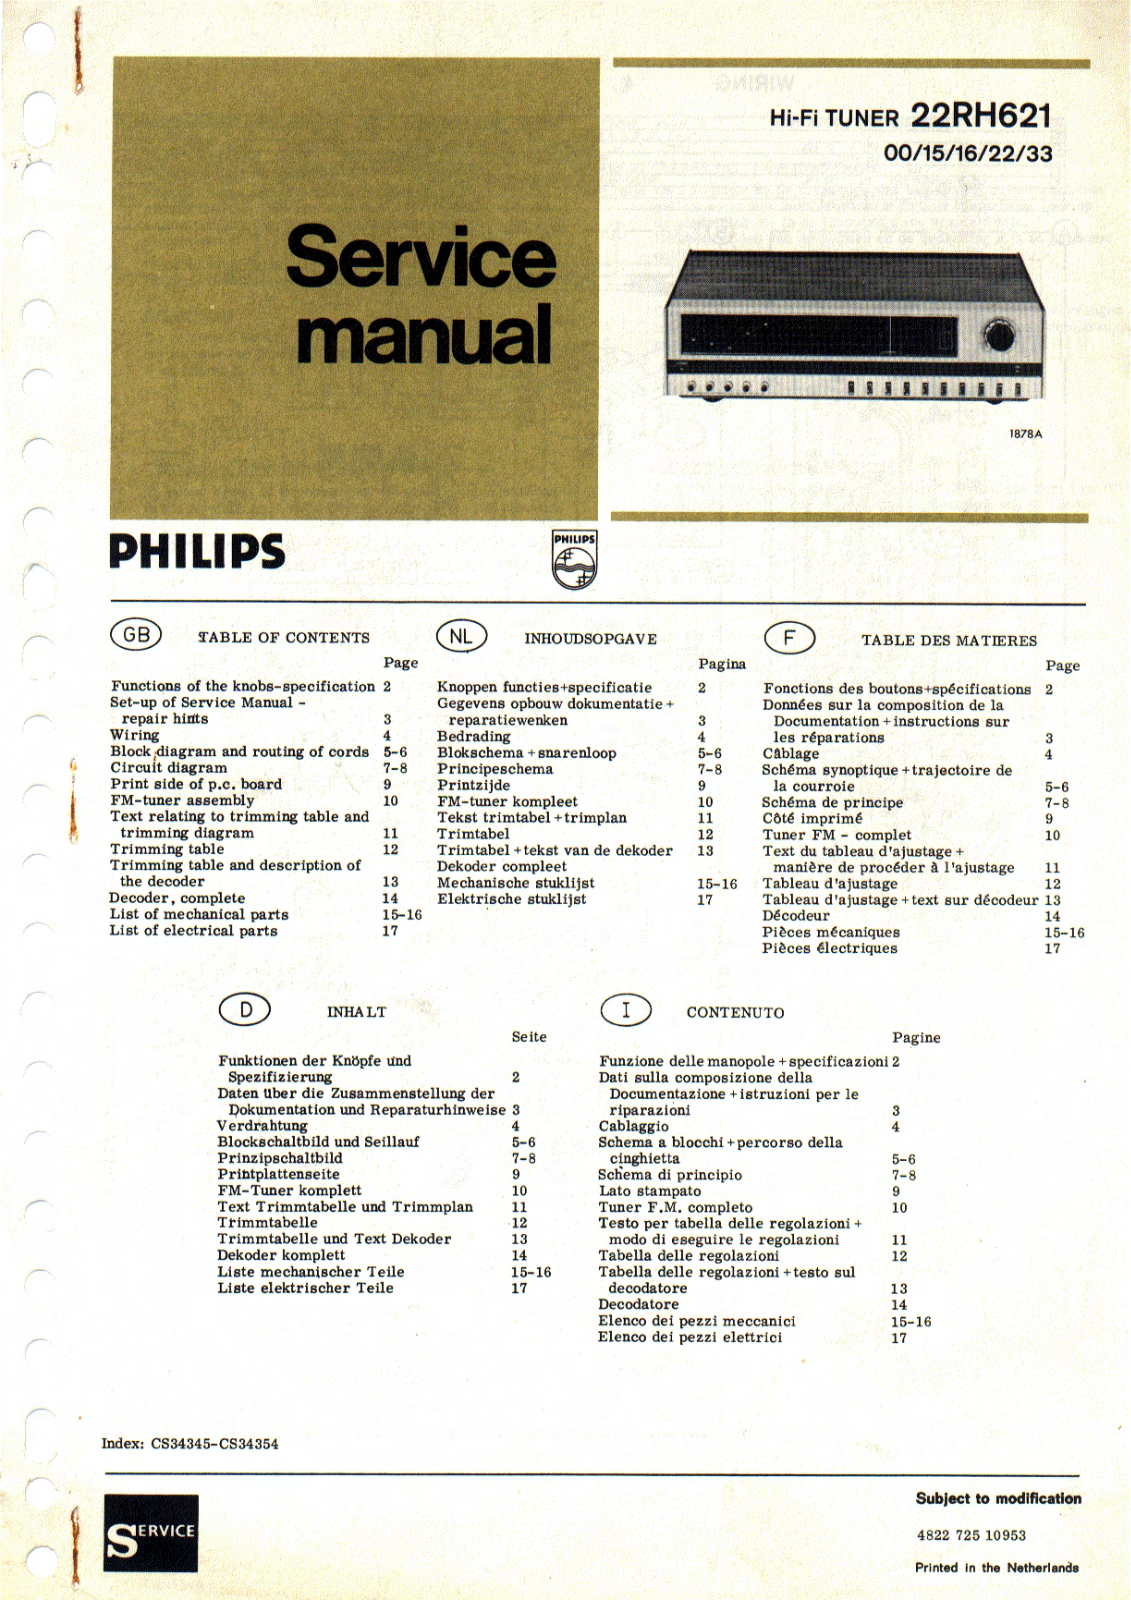 Philips 22-RH-621 Service Manual